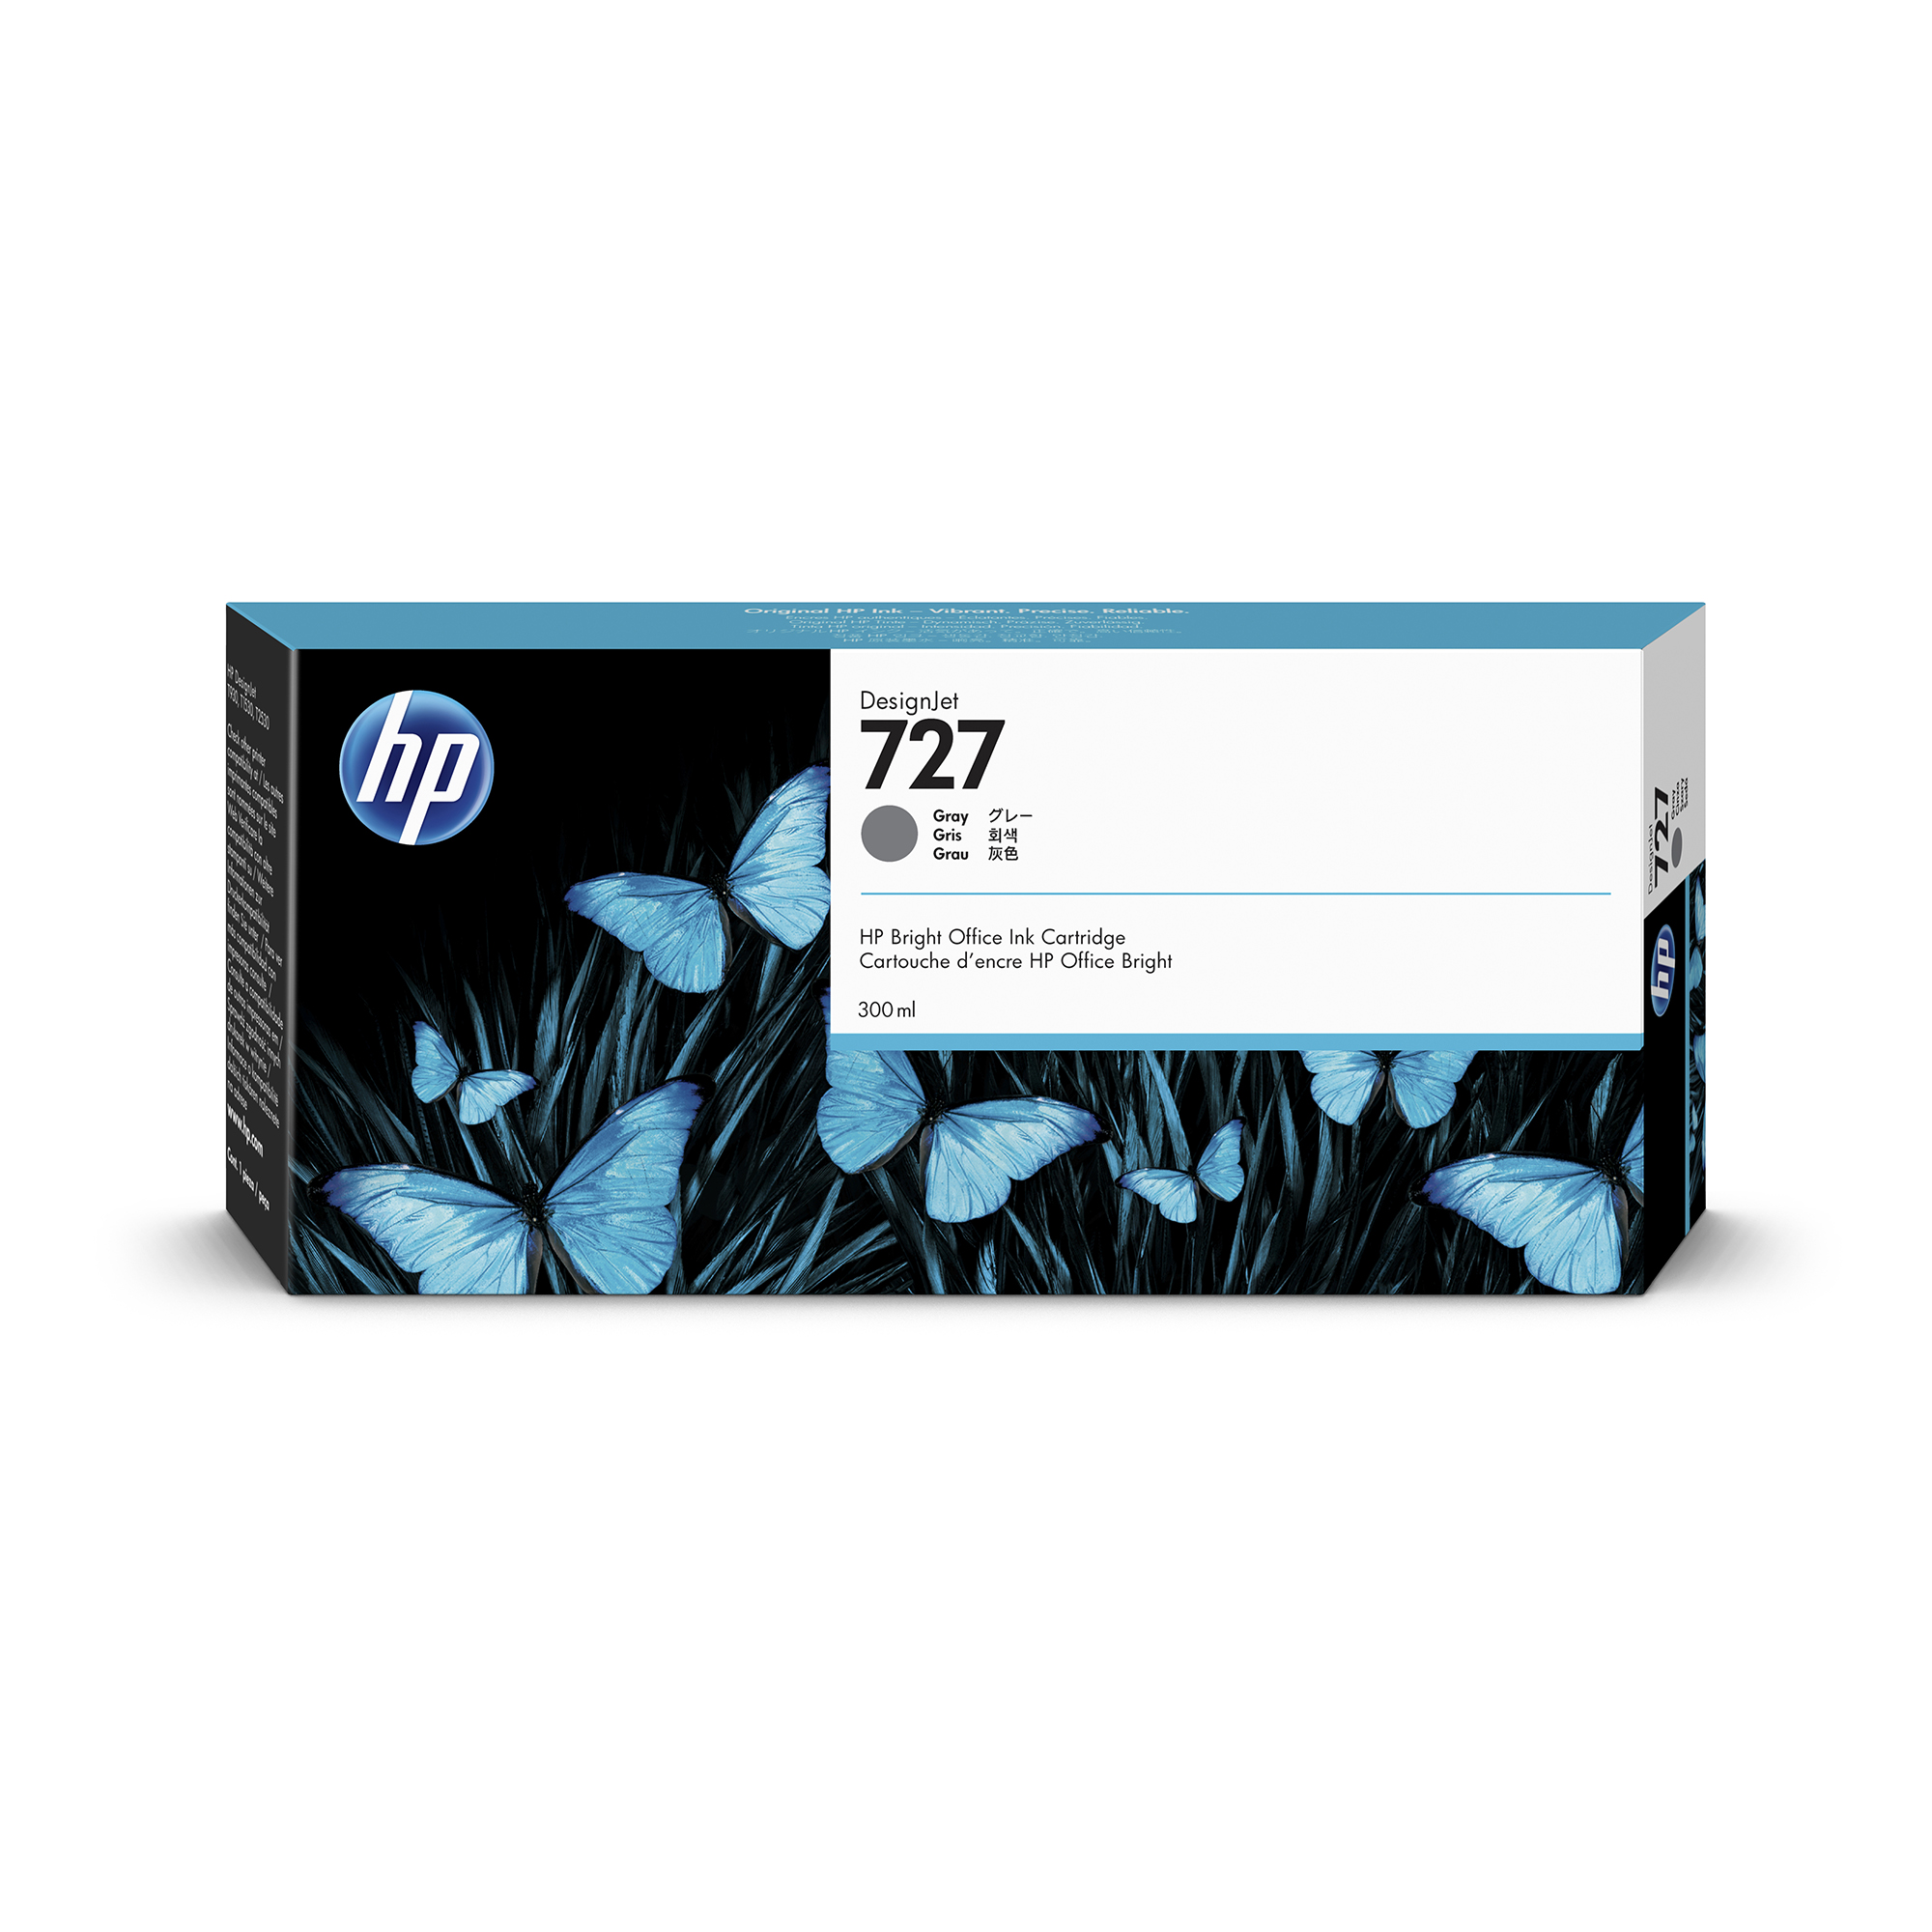 HP 727 Original Tinte grau - 300 ml